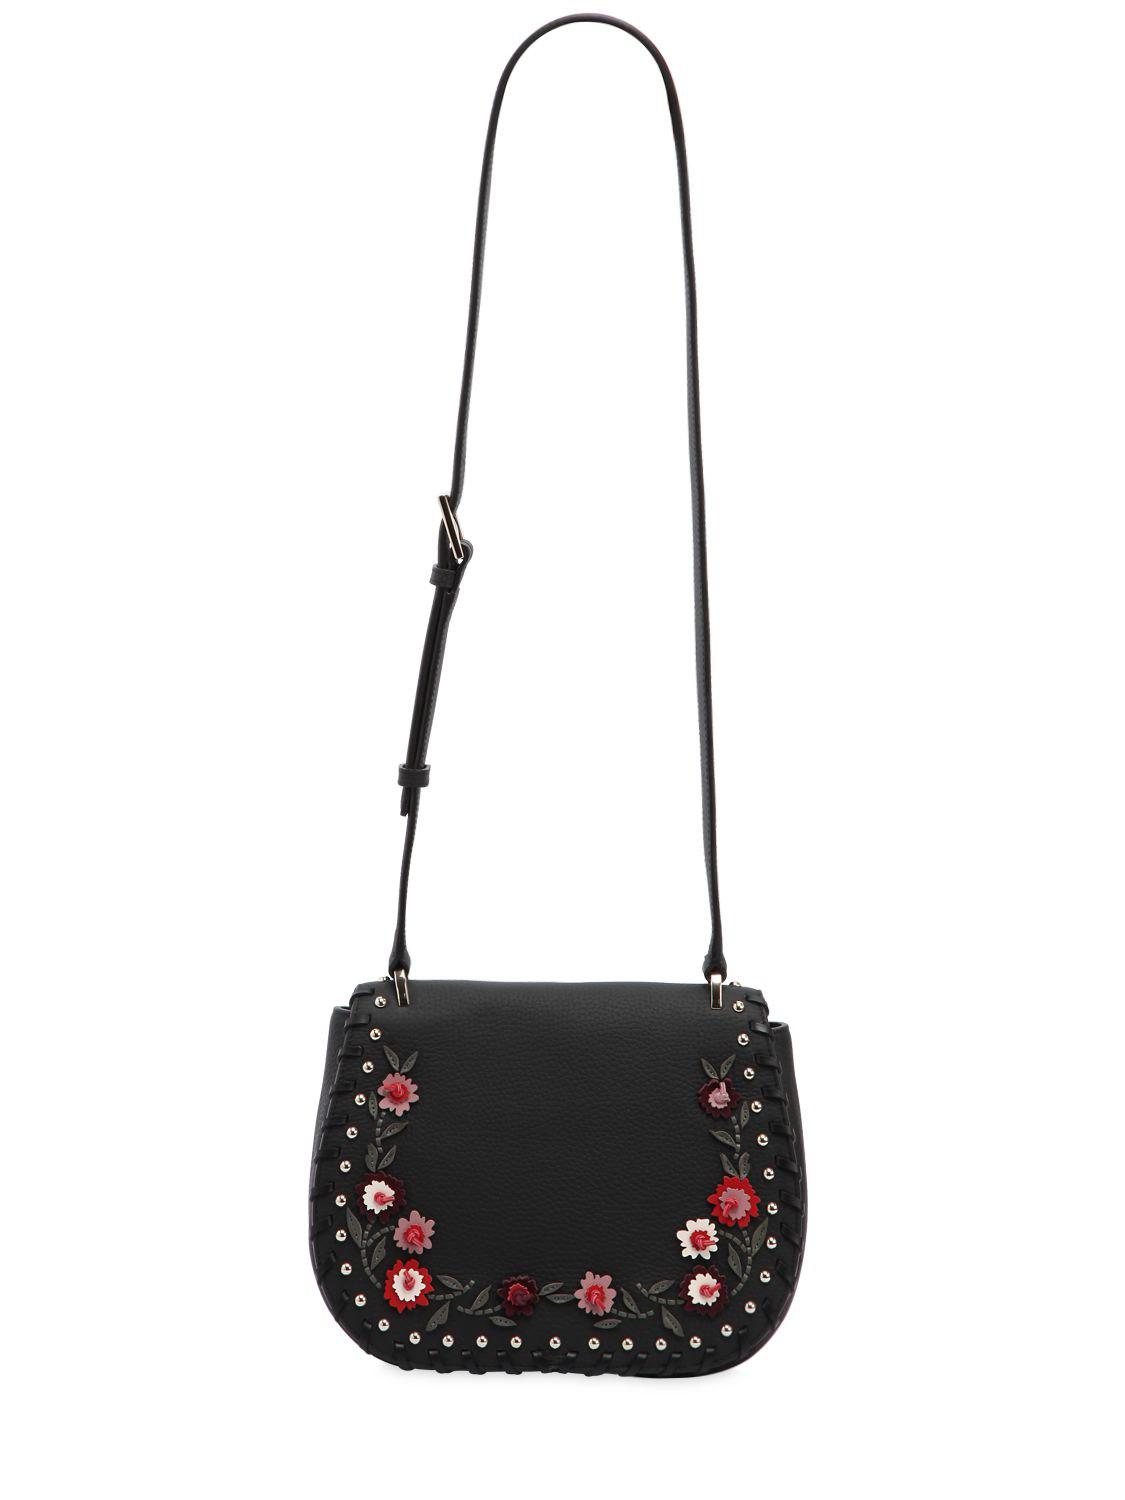 Kate Spade Tressa Floral Appliqués Leather Bag in Black | Lyst